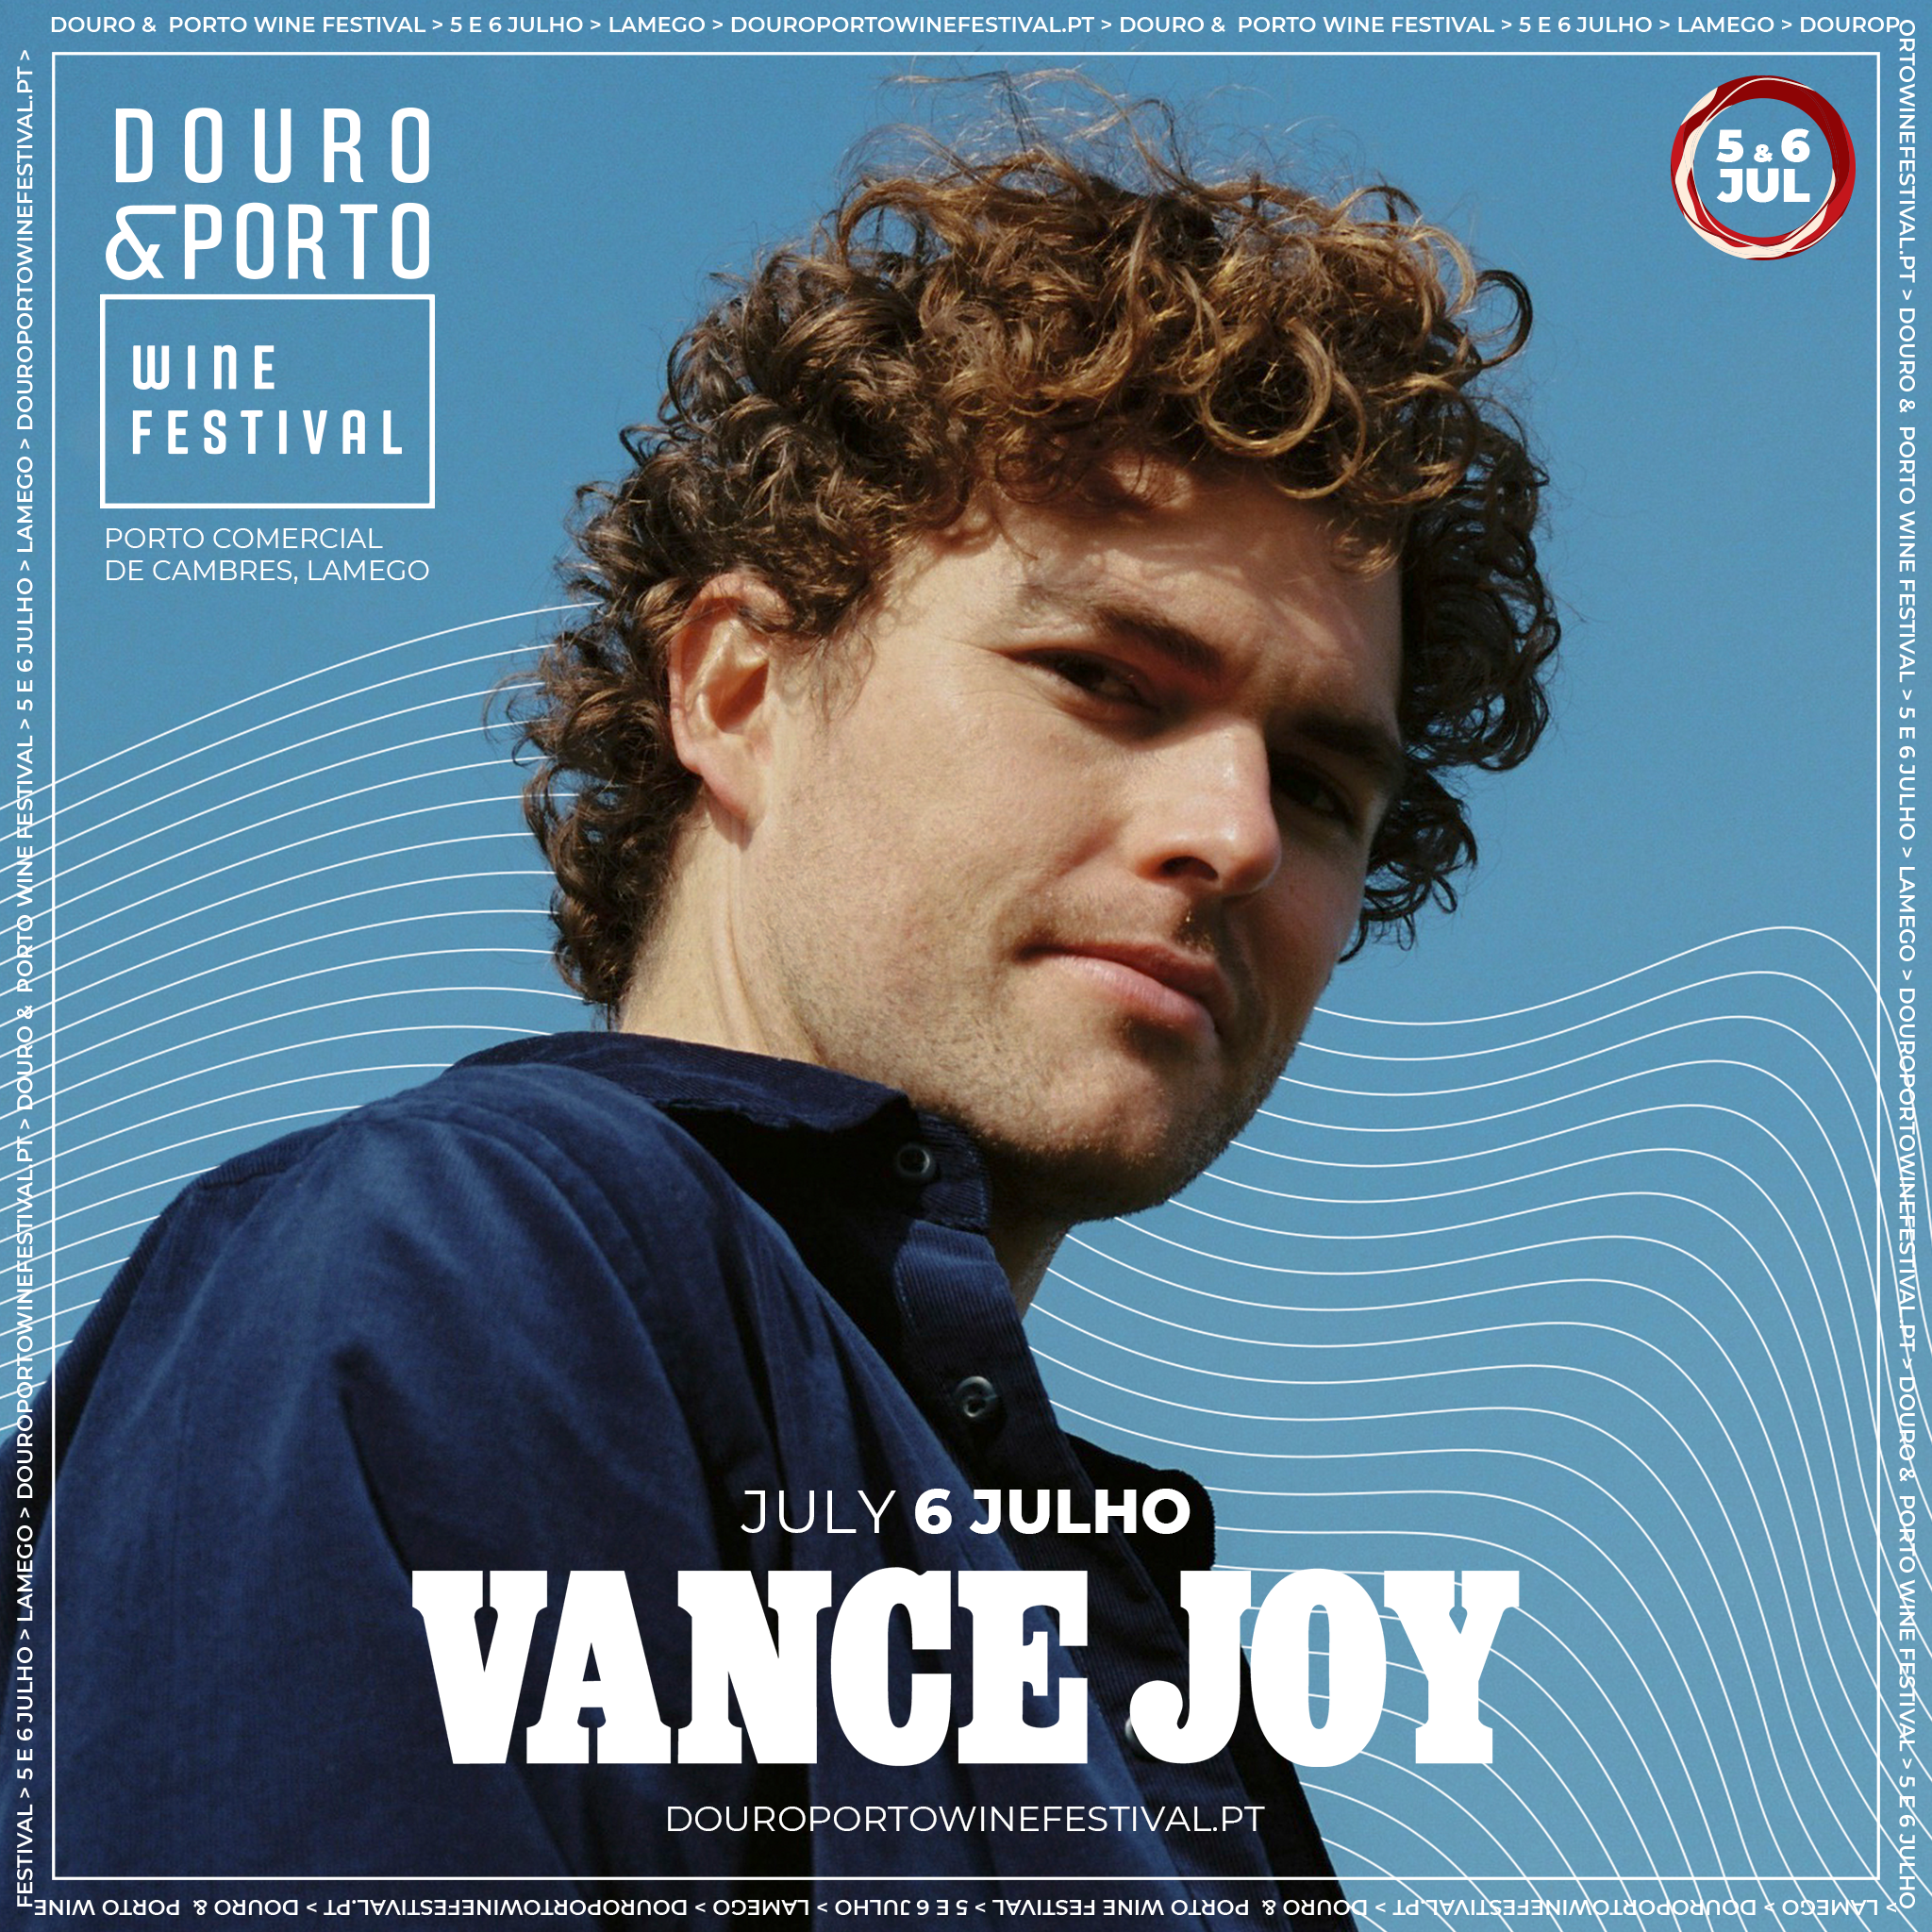 DOURO PORTO WINE FESTIVAL - Vance Joy